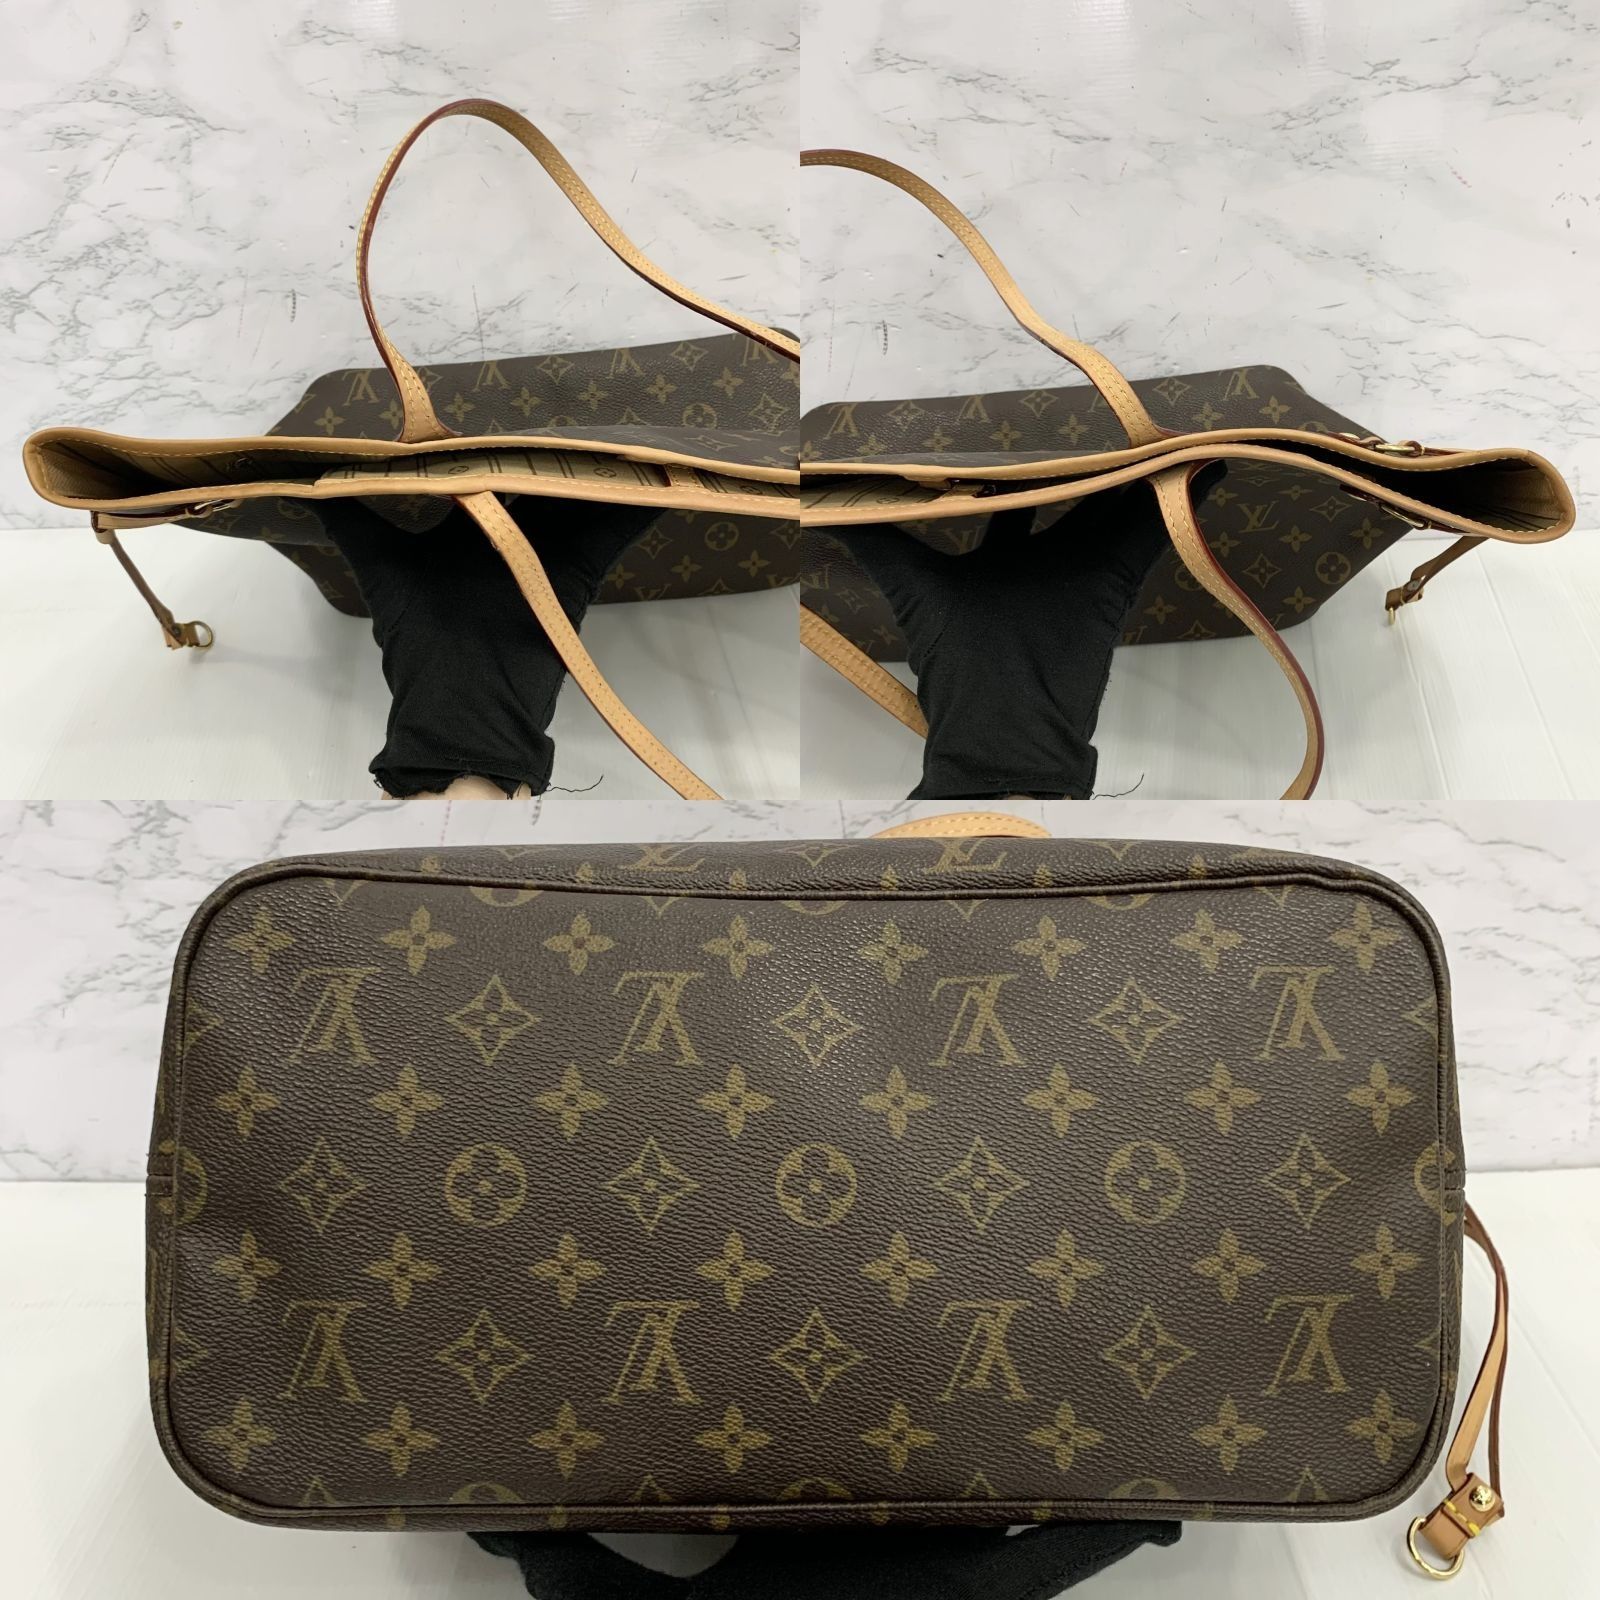 Shop Louis Vuitton NEVERFULL Monogram Casual Style Unisex Street Style A4  Leather (M41178, M41177, M40995) by Lecielbleu